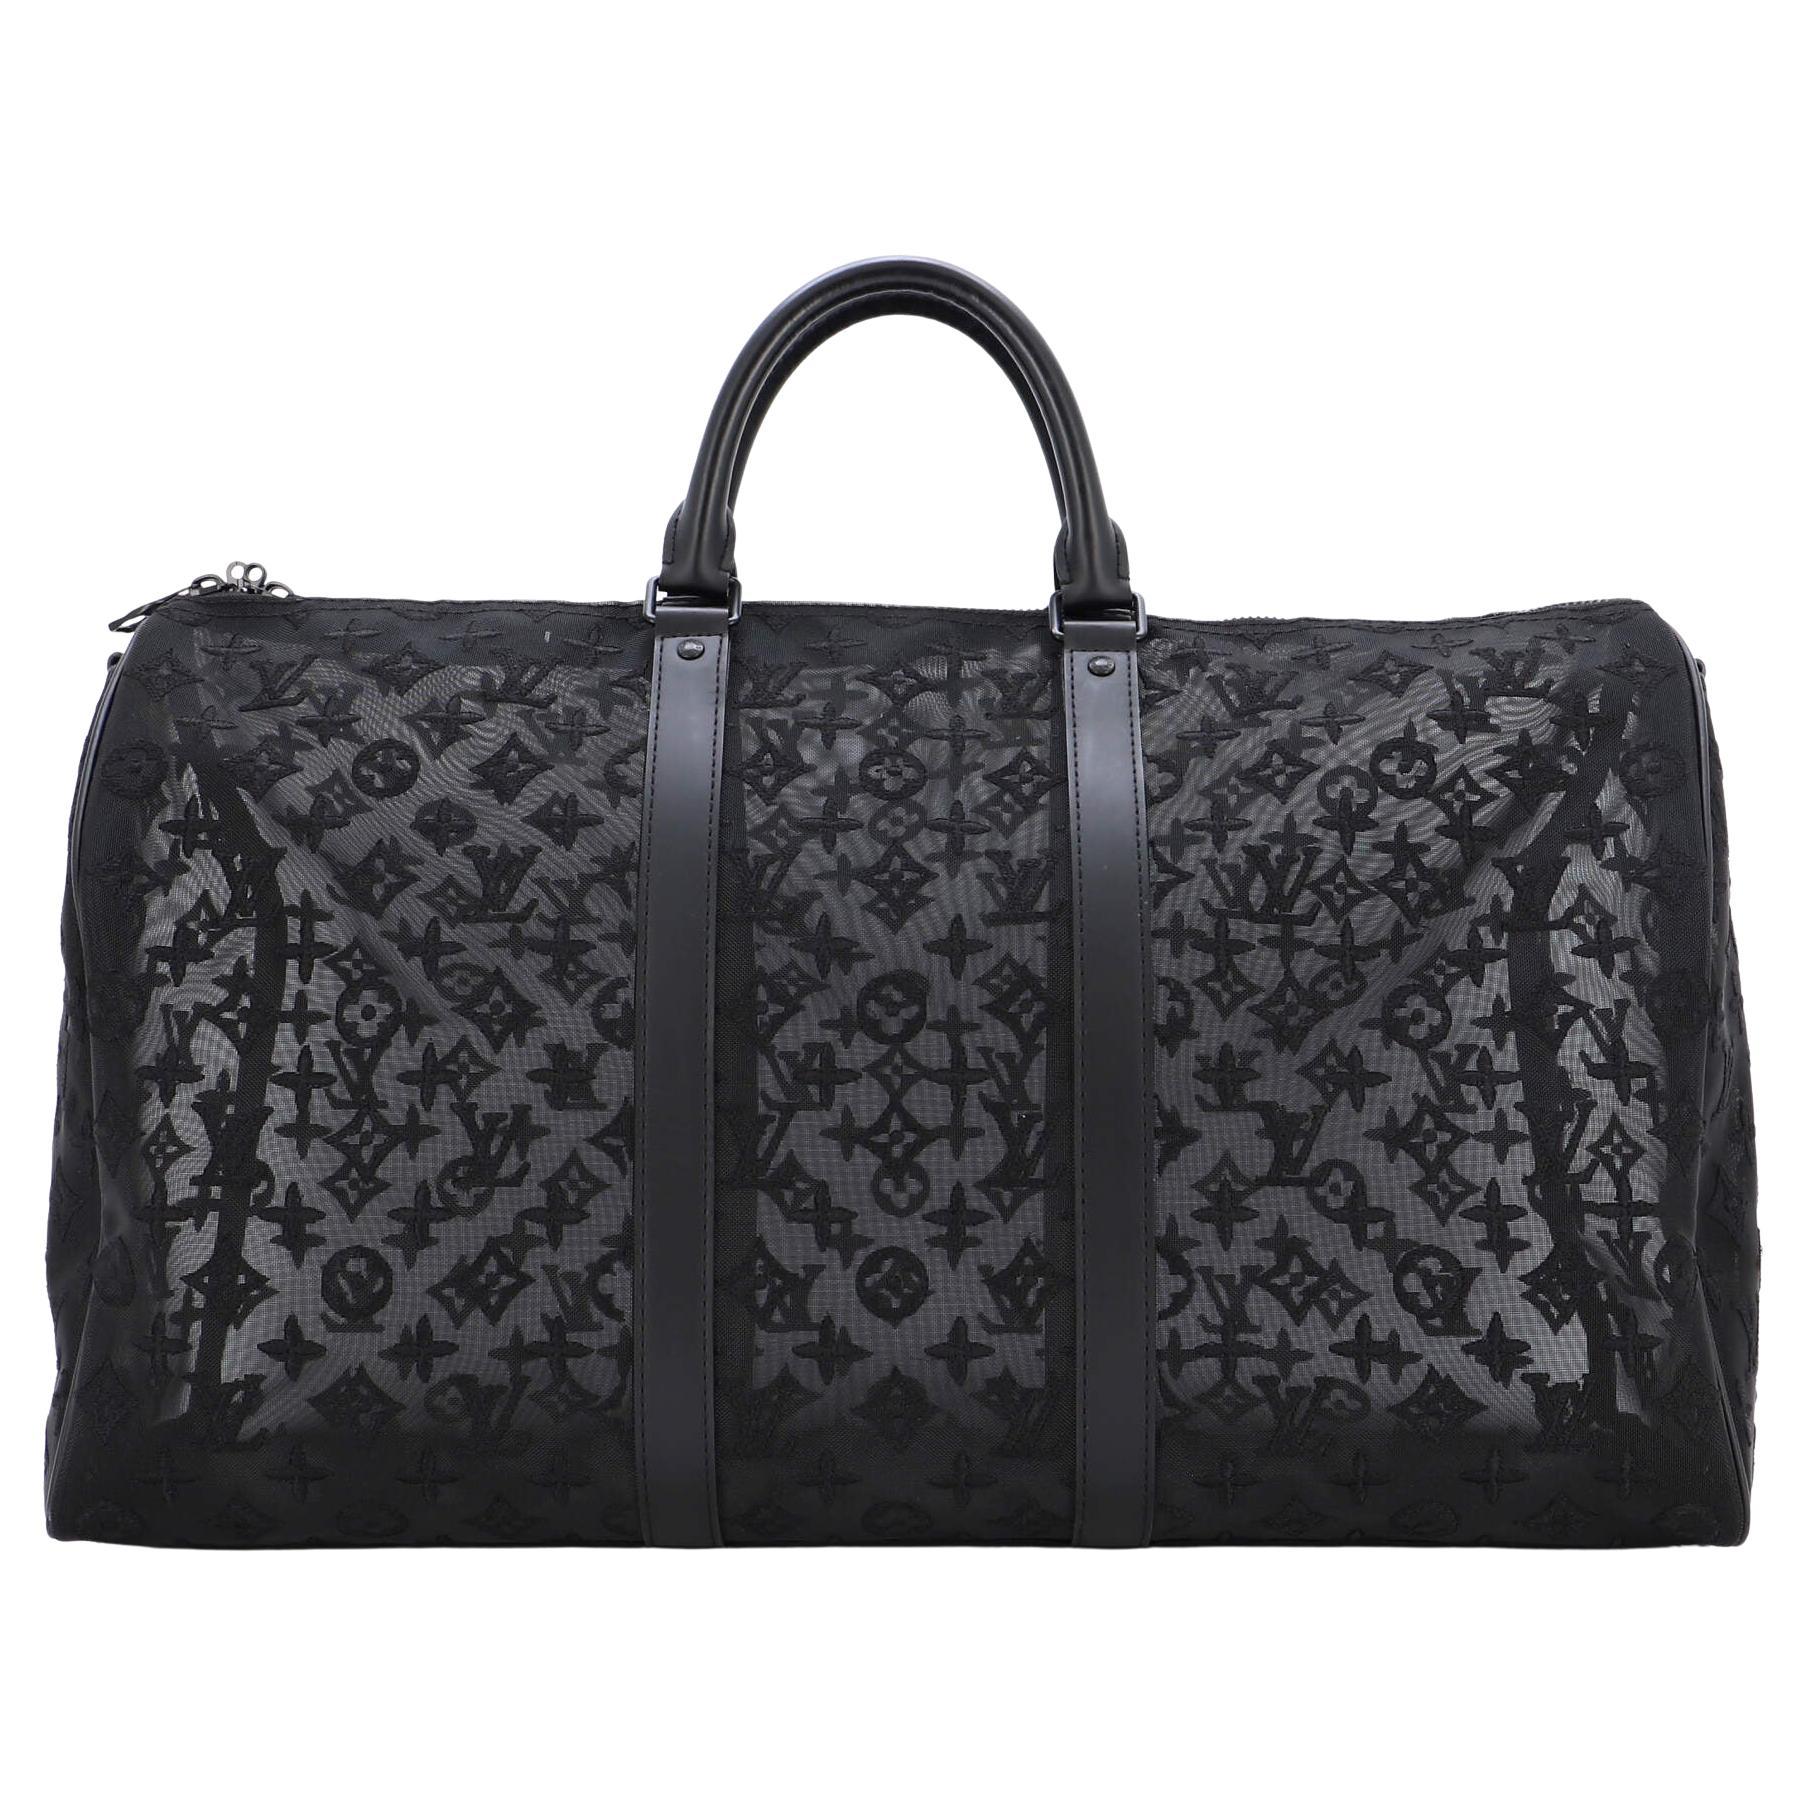 Iridescent Louis Vuitton Keepall - 2 For Sale on 1stDibs